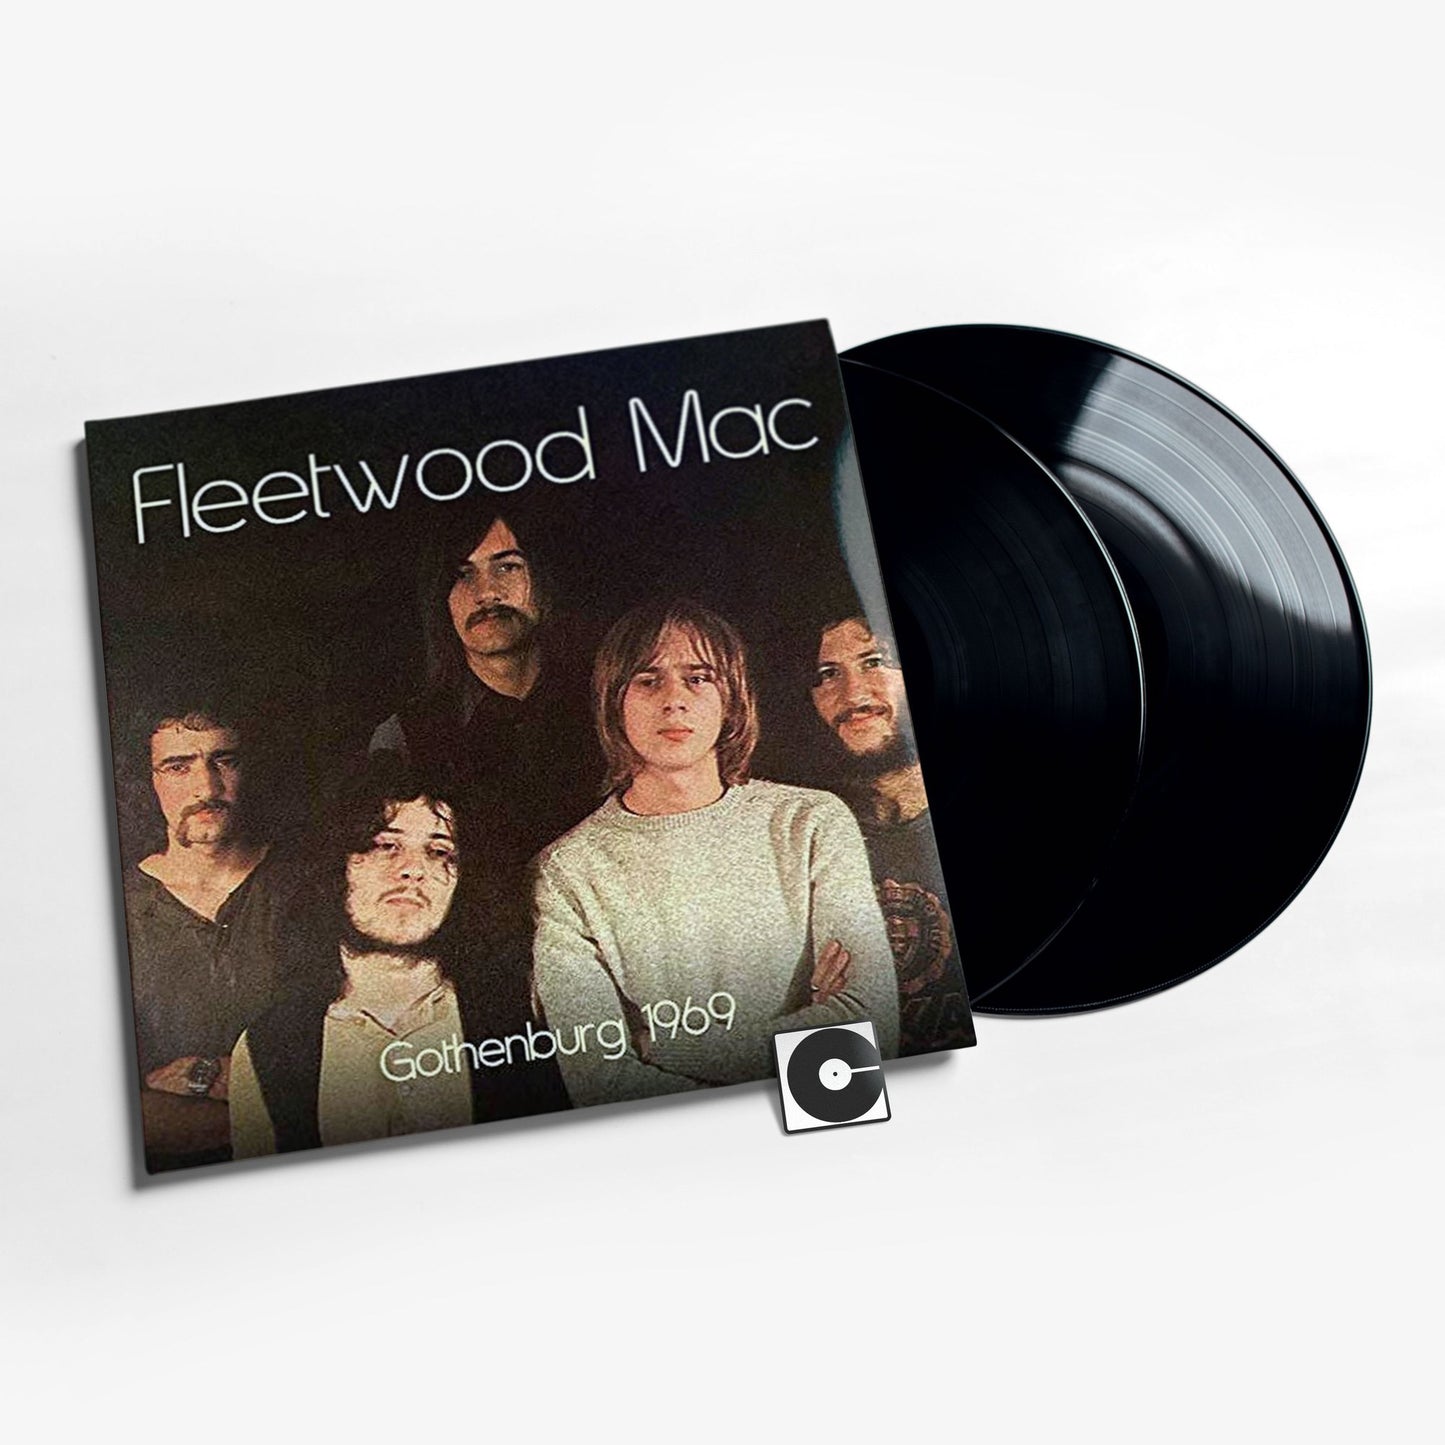 Fleetwood Mac - "Gothenburg 1969"